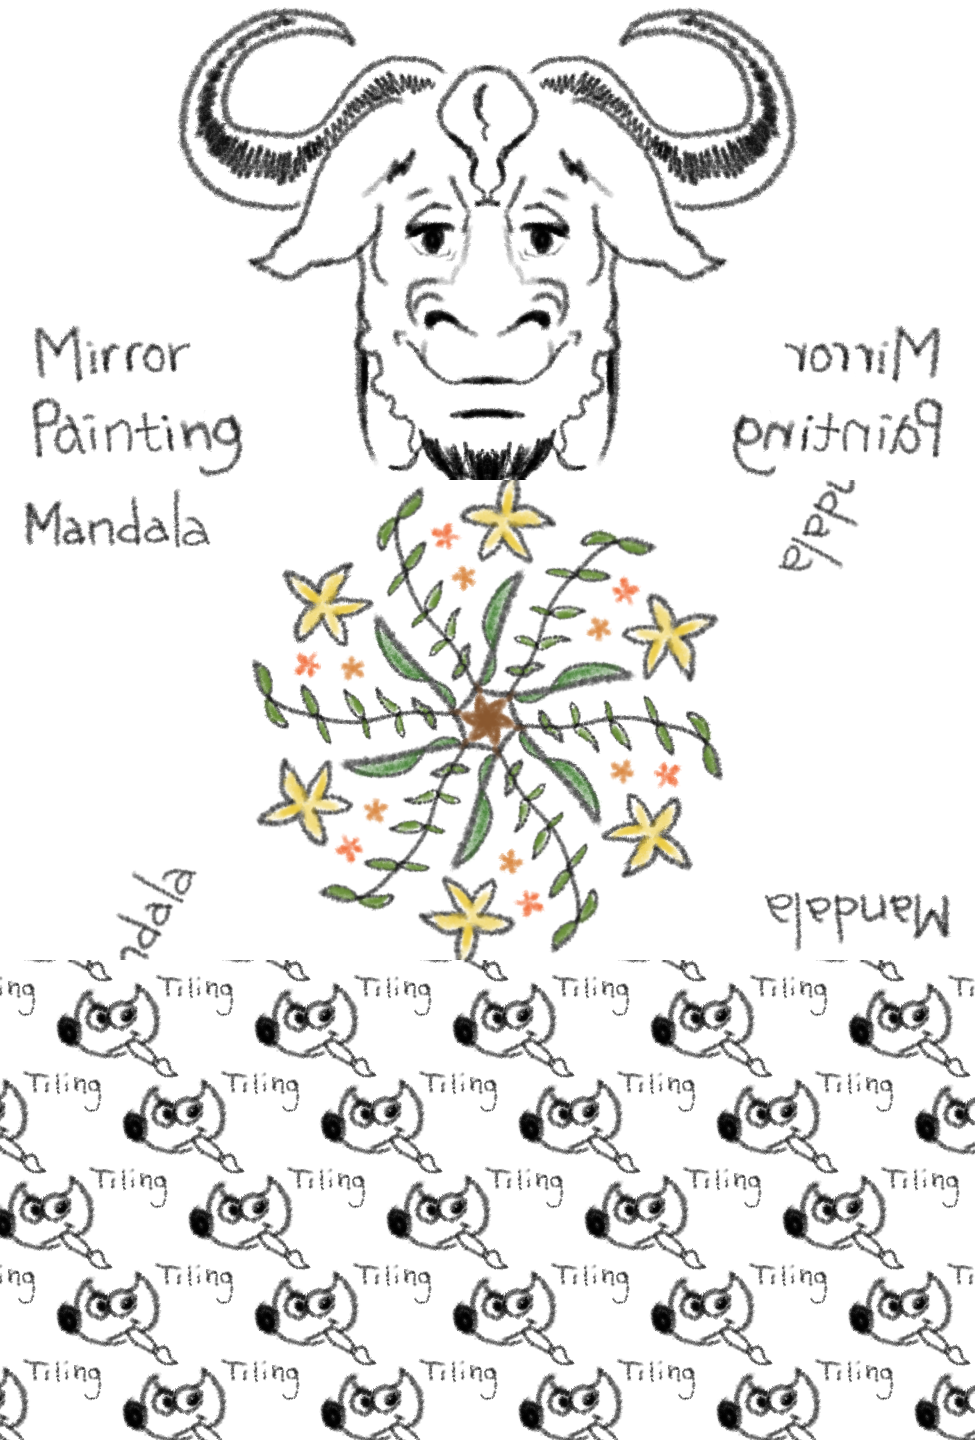 Peinture en miroir, mandala et tuile, dessin test d’Aryeom